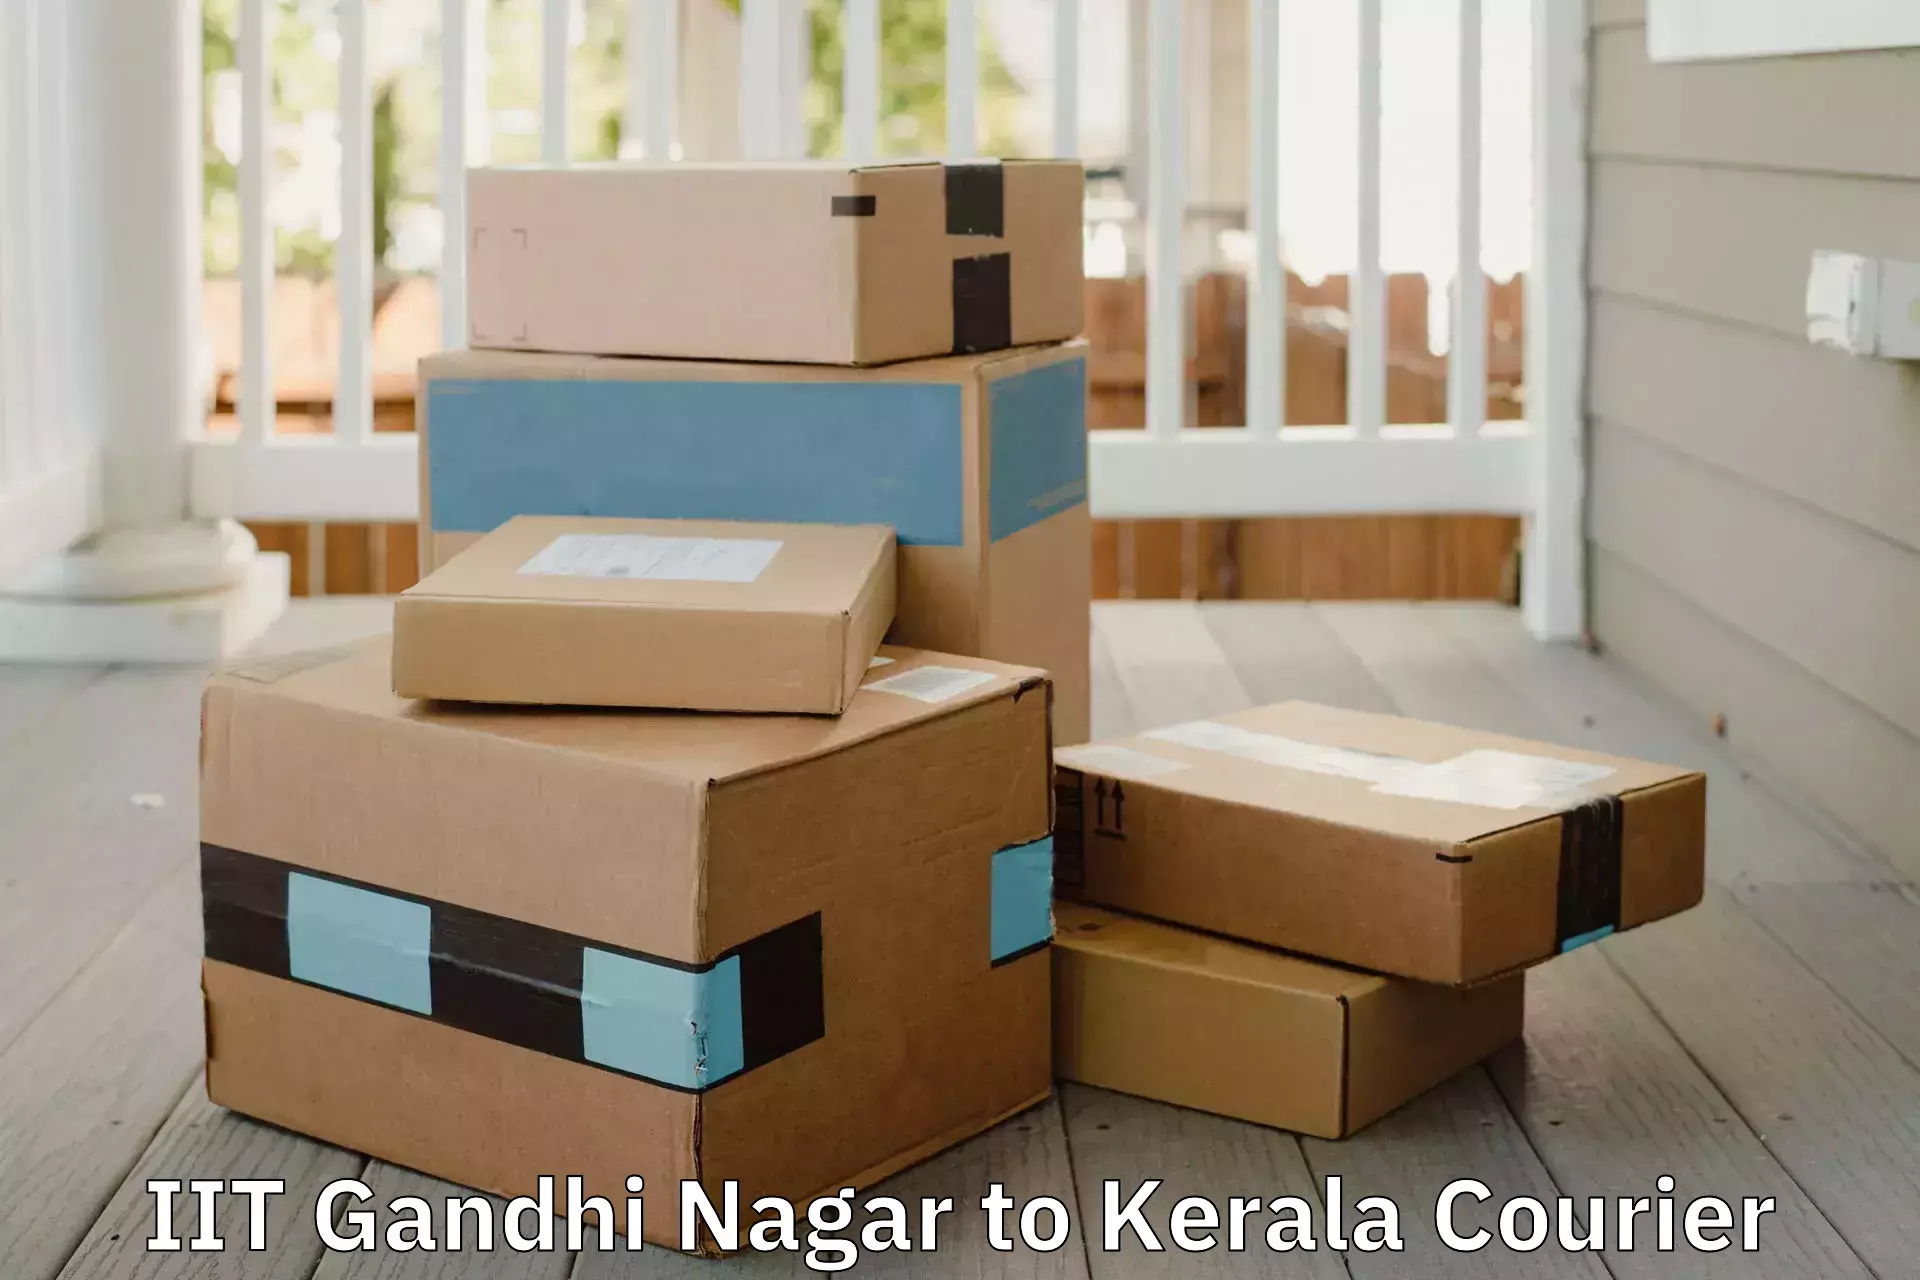 Professional moving company IIT Gandhi Nagar to Pala